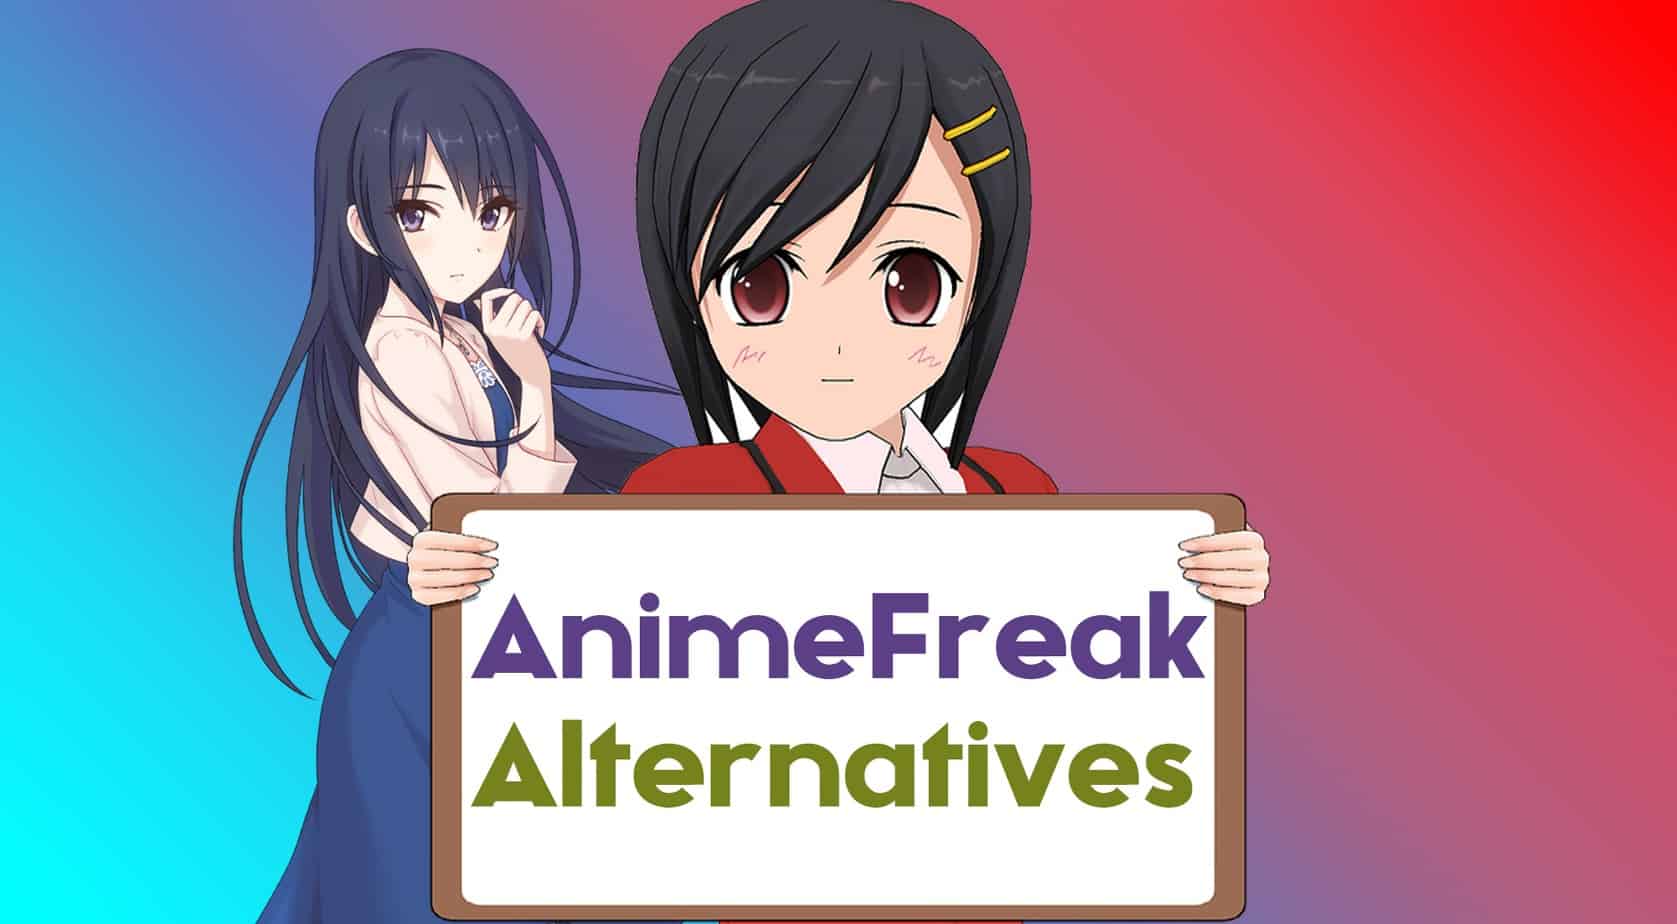 AnimeFreak alternatives